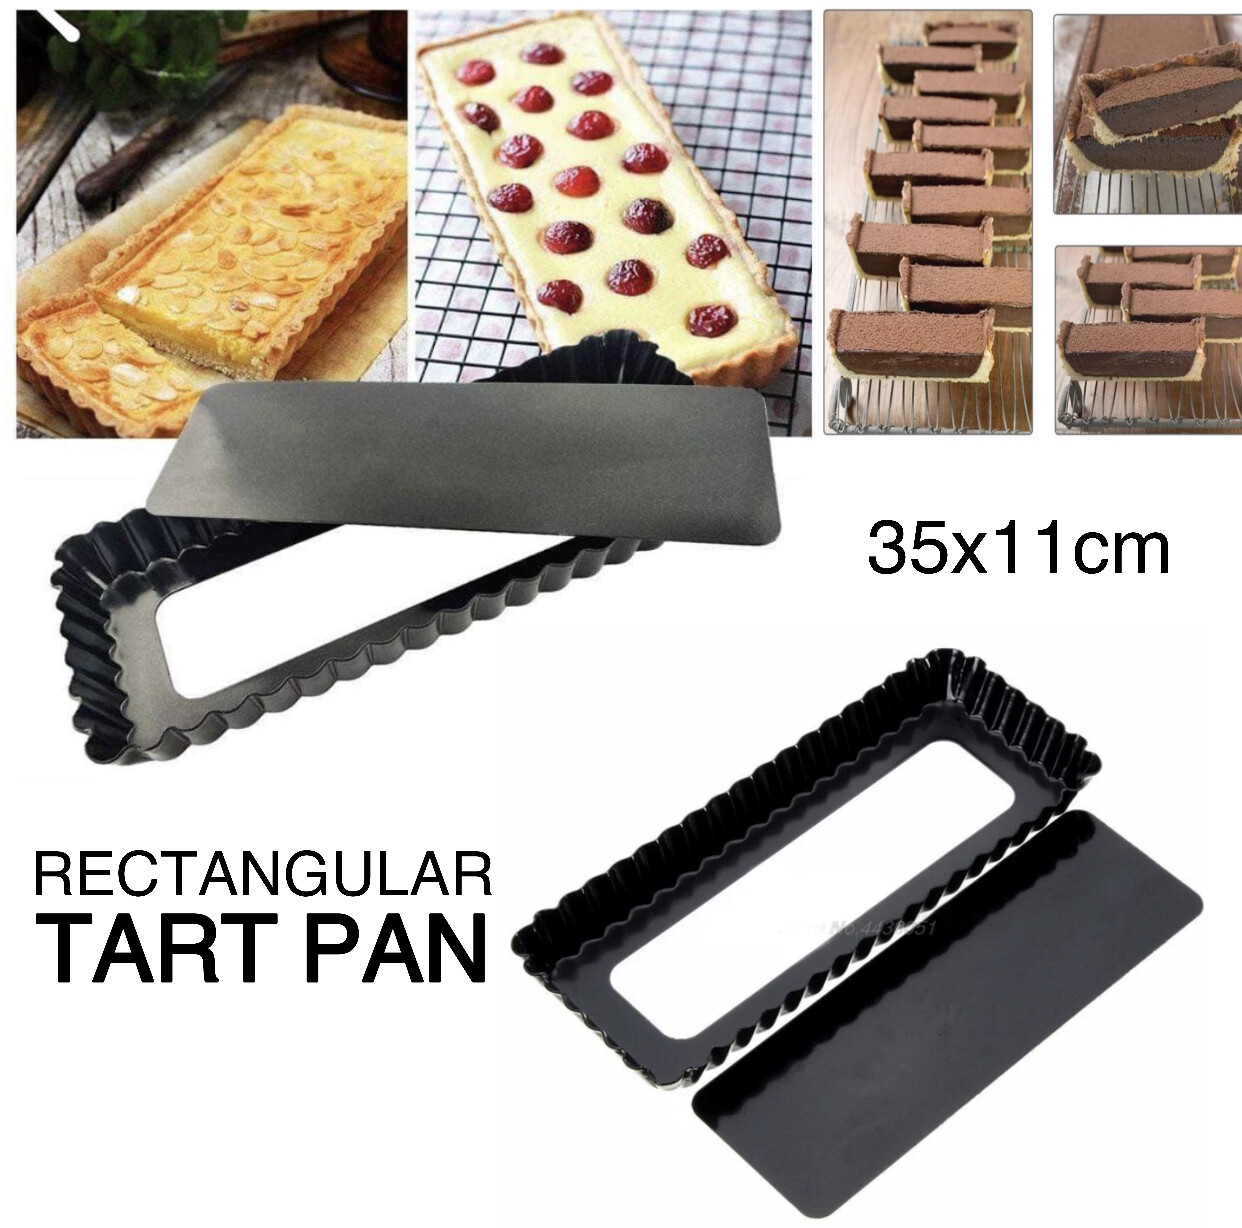 Rectangular Tart Pan 35cm